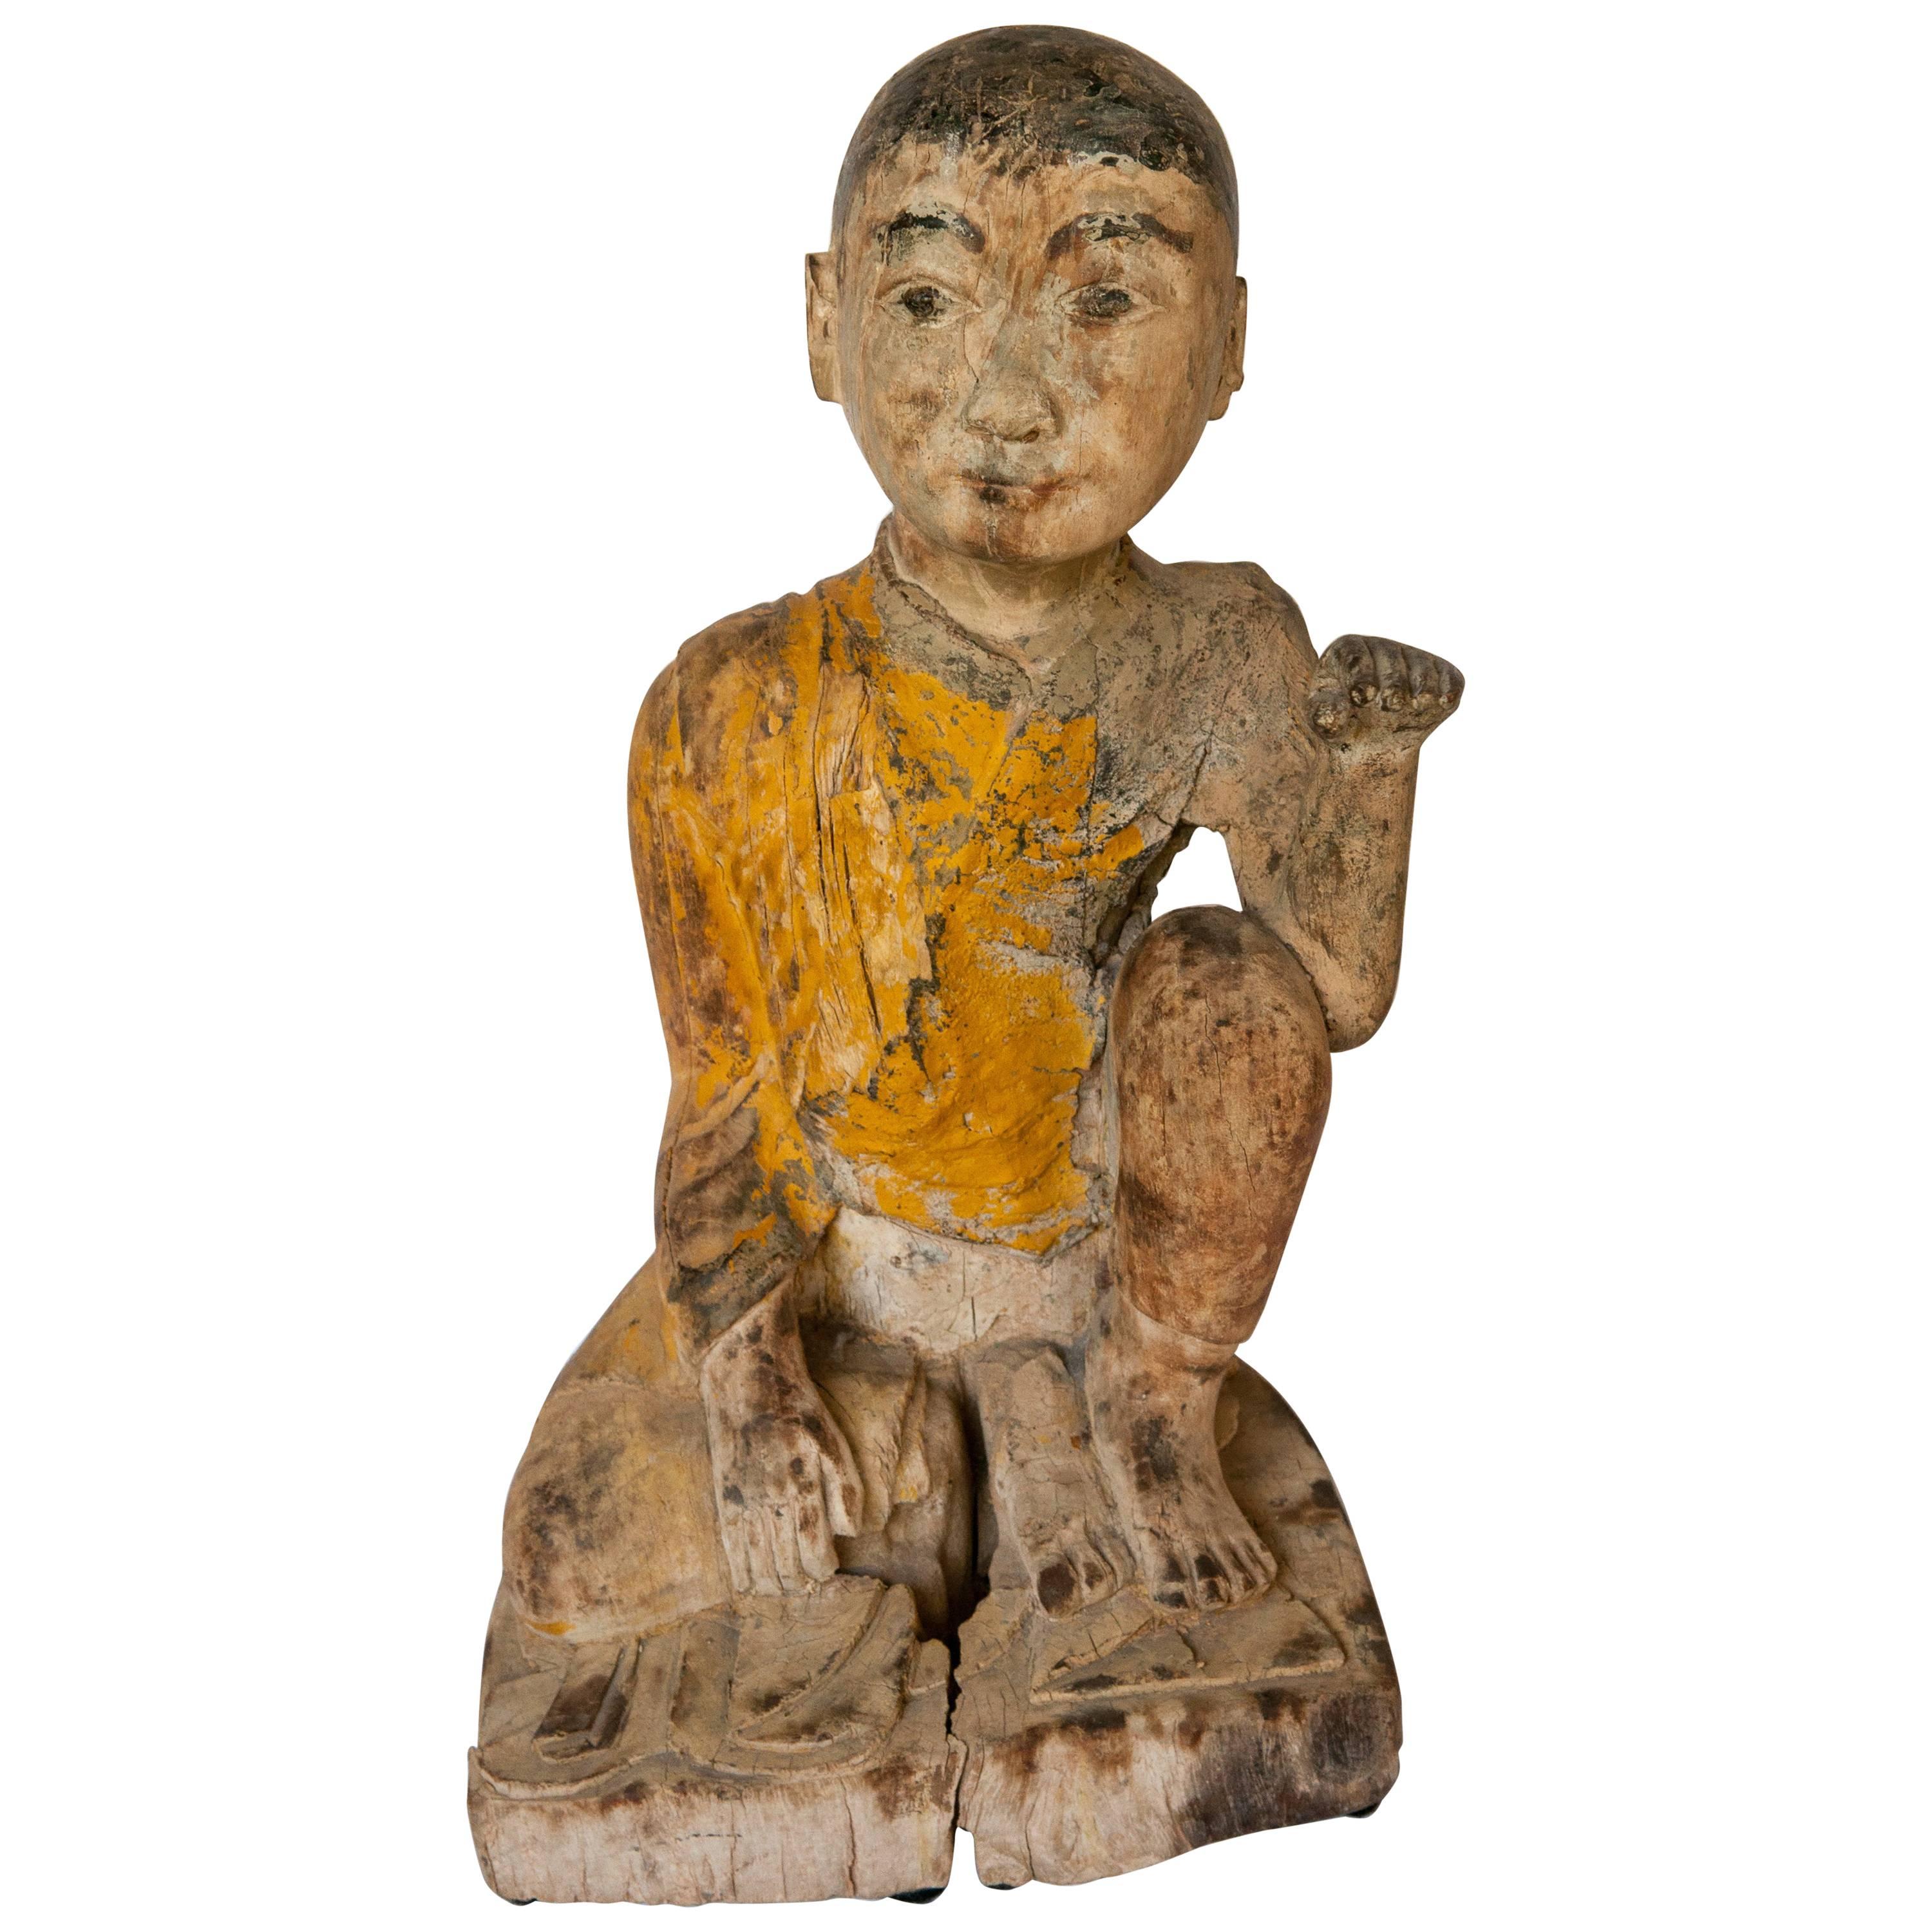 Burmese Buddhist Wood Carving, Sitting Monk or Teacher, Early 20th Century